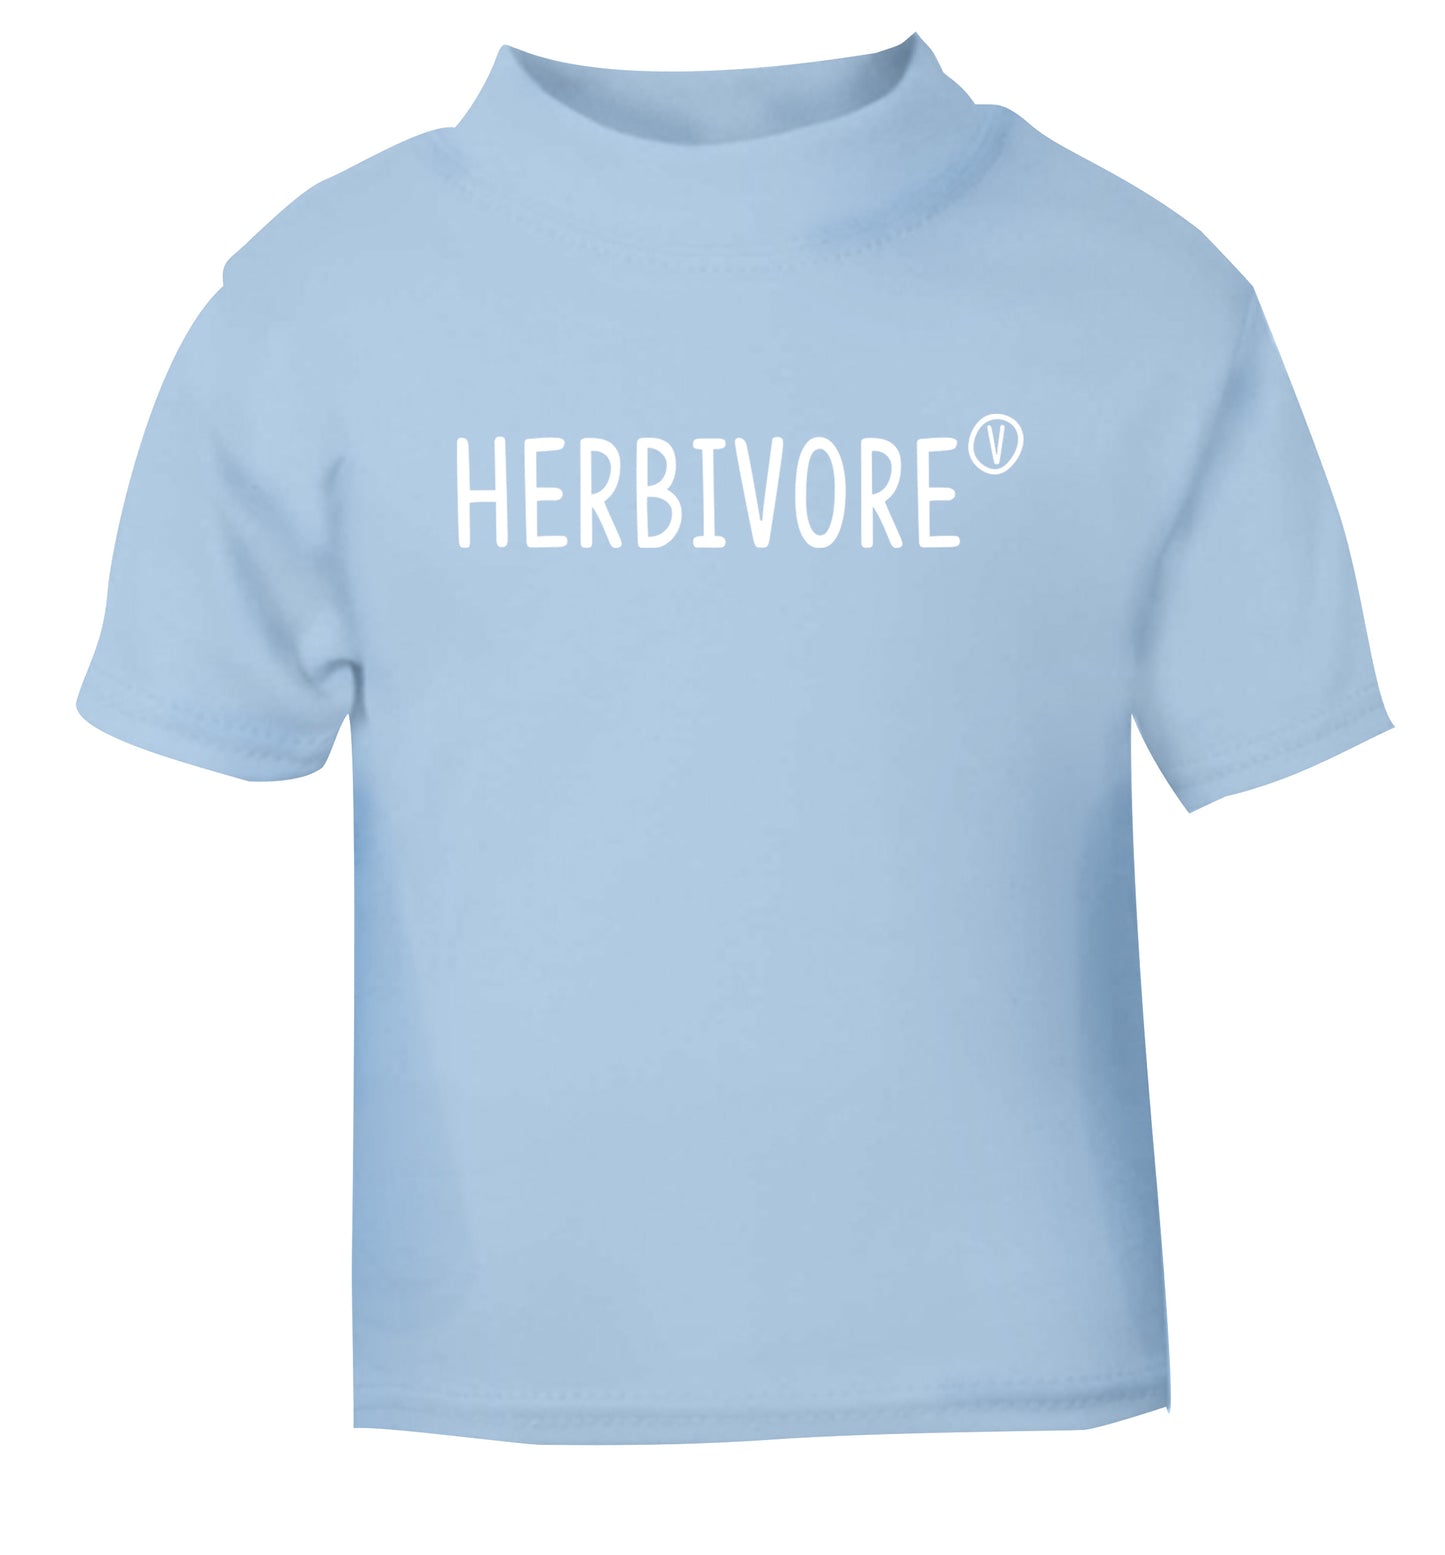 Herbivore light blue Baby Toddler Tshirt 2 Years